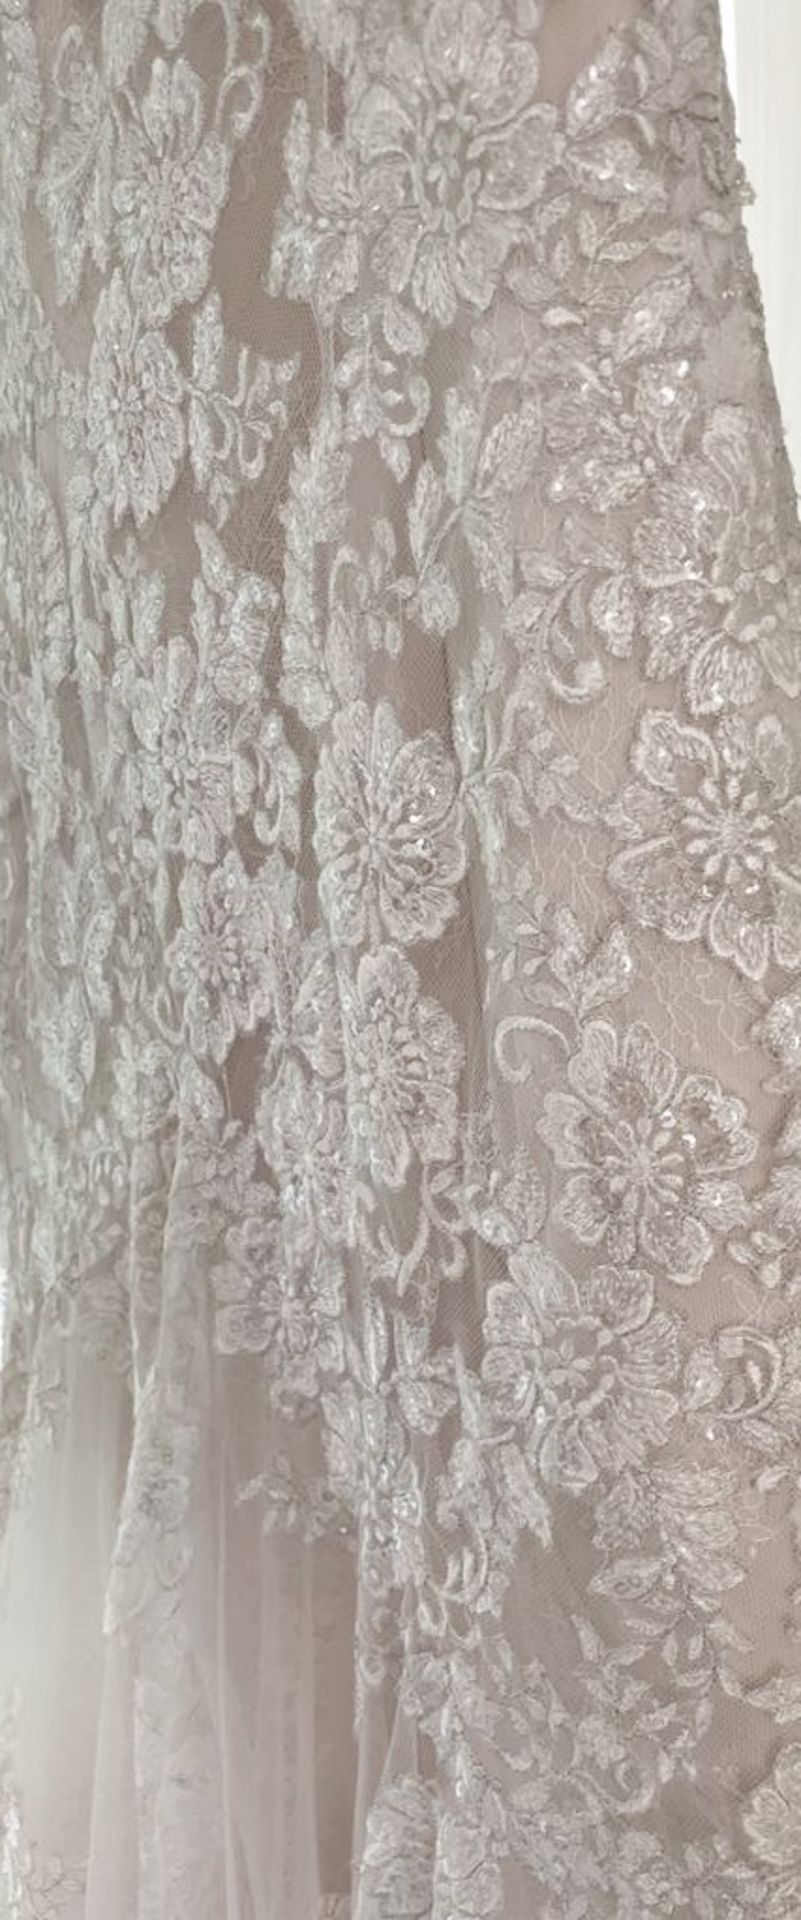 1 x DIANA LEGRANDE '7517' Designer Wedding Dress Bridal Gown - Size: UK 10 - Original RRP £1,800 - Image 6 of 18